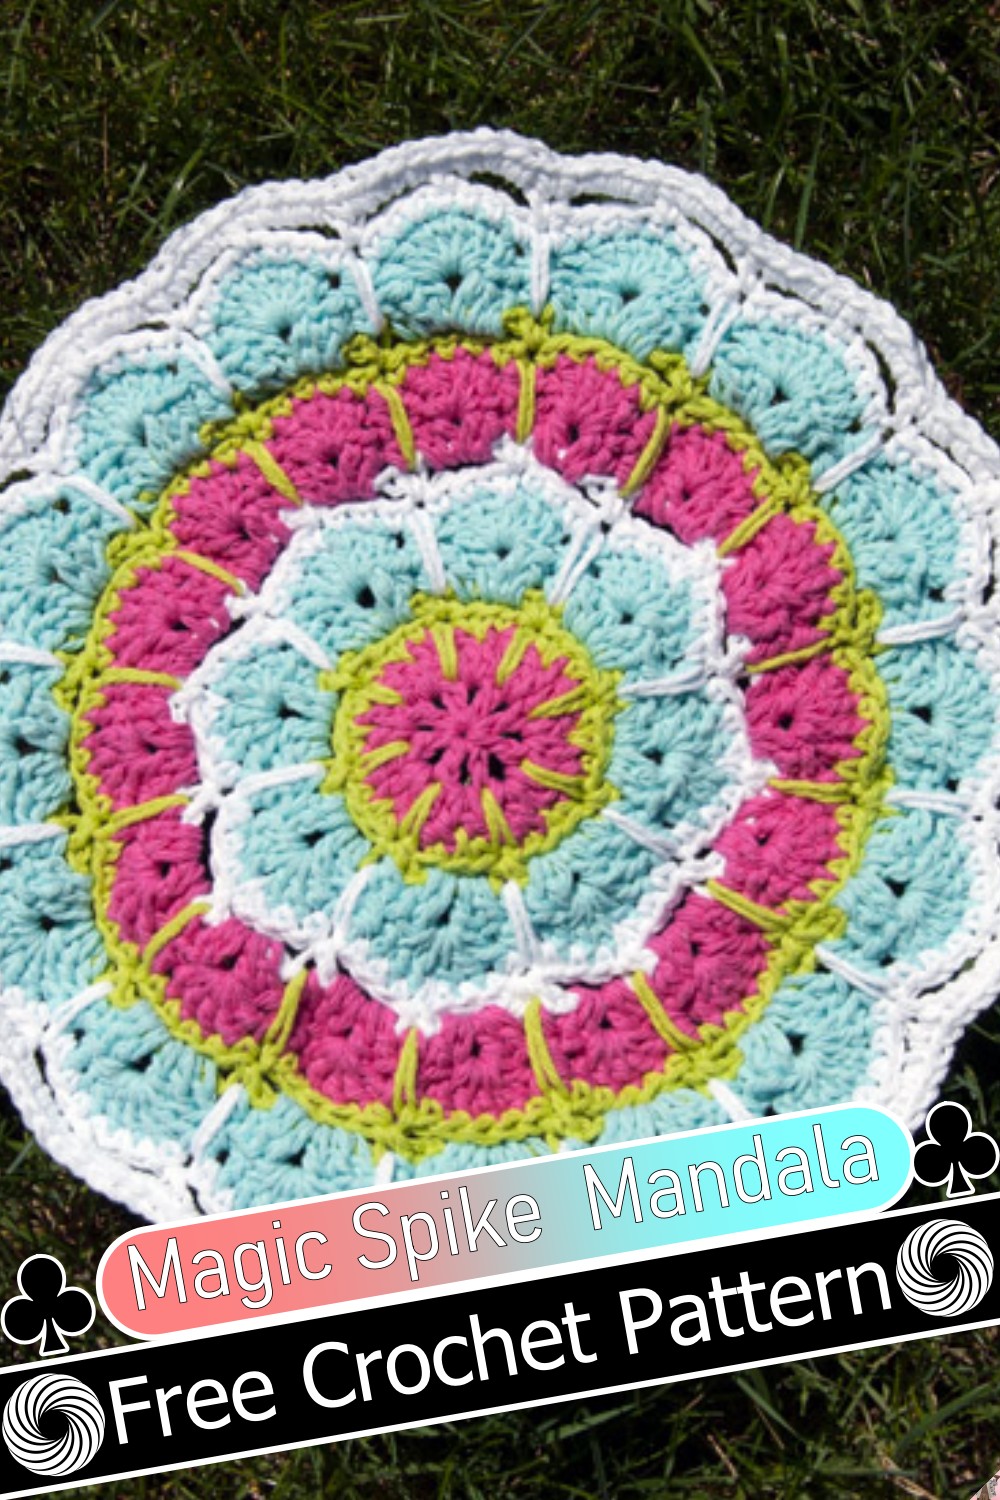 Magic Spike Crochet Mandala